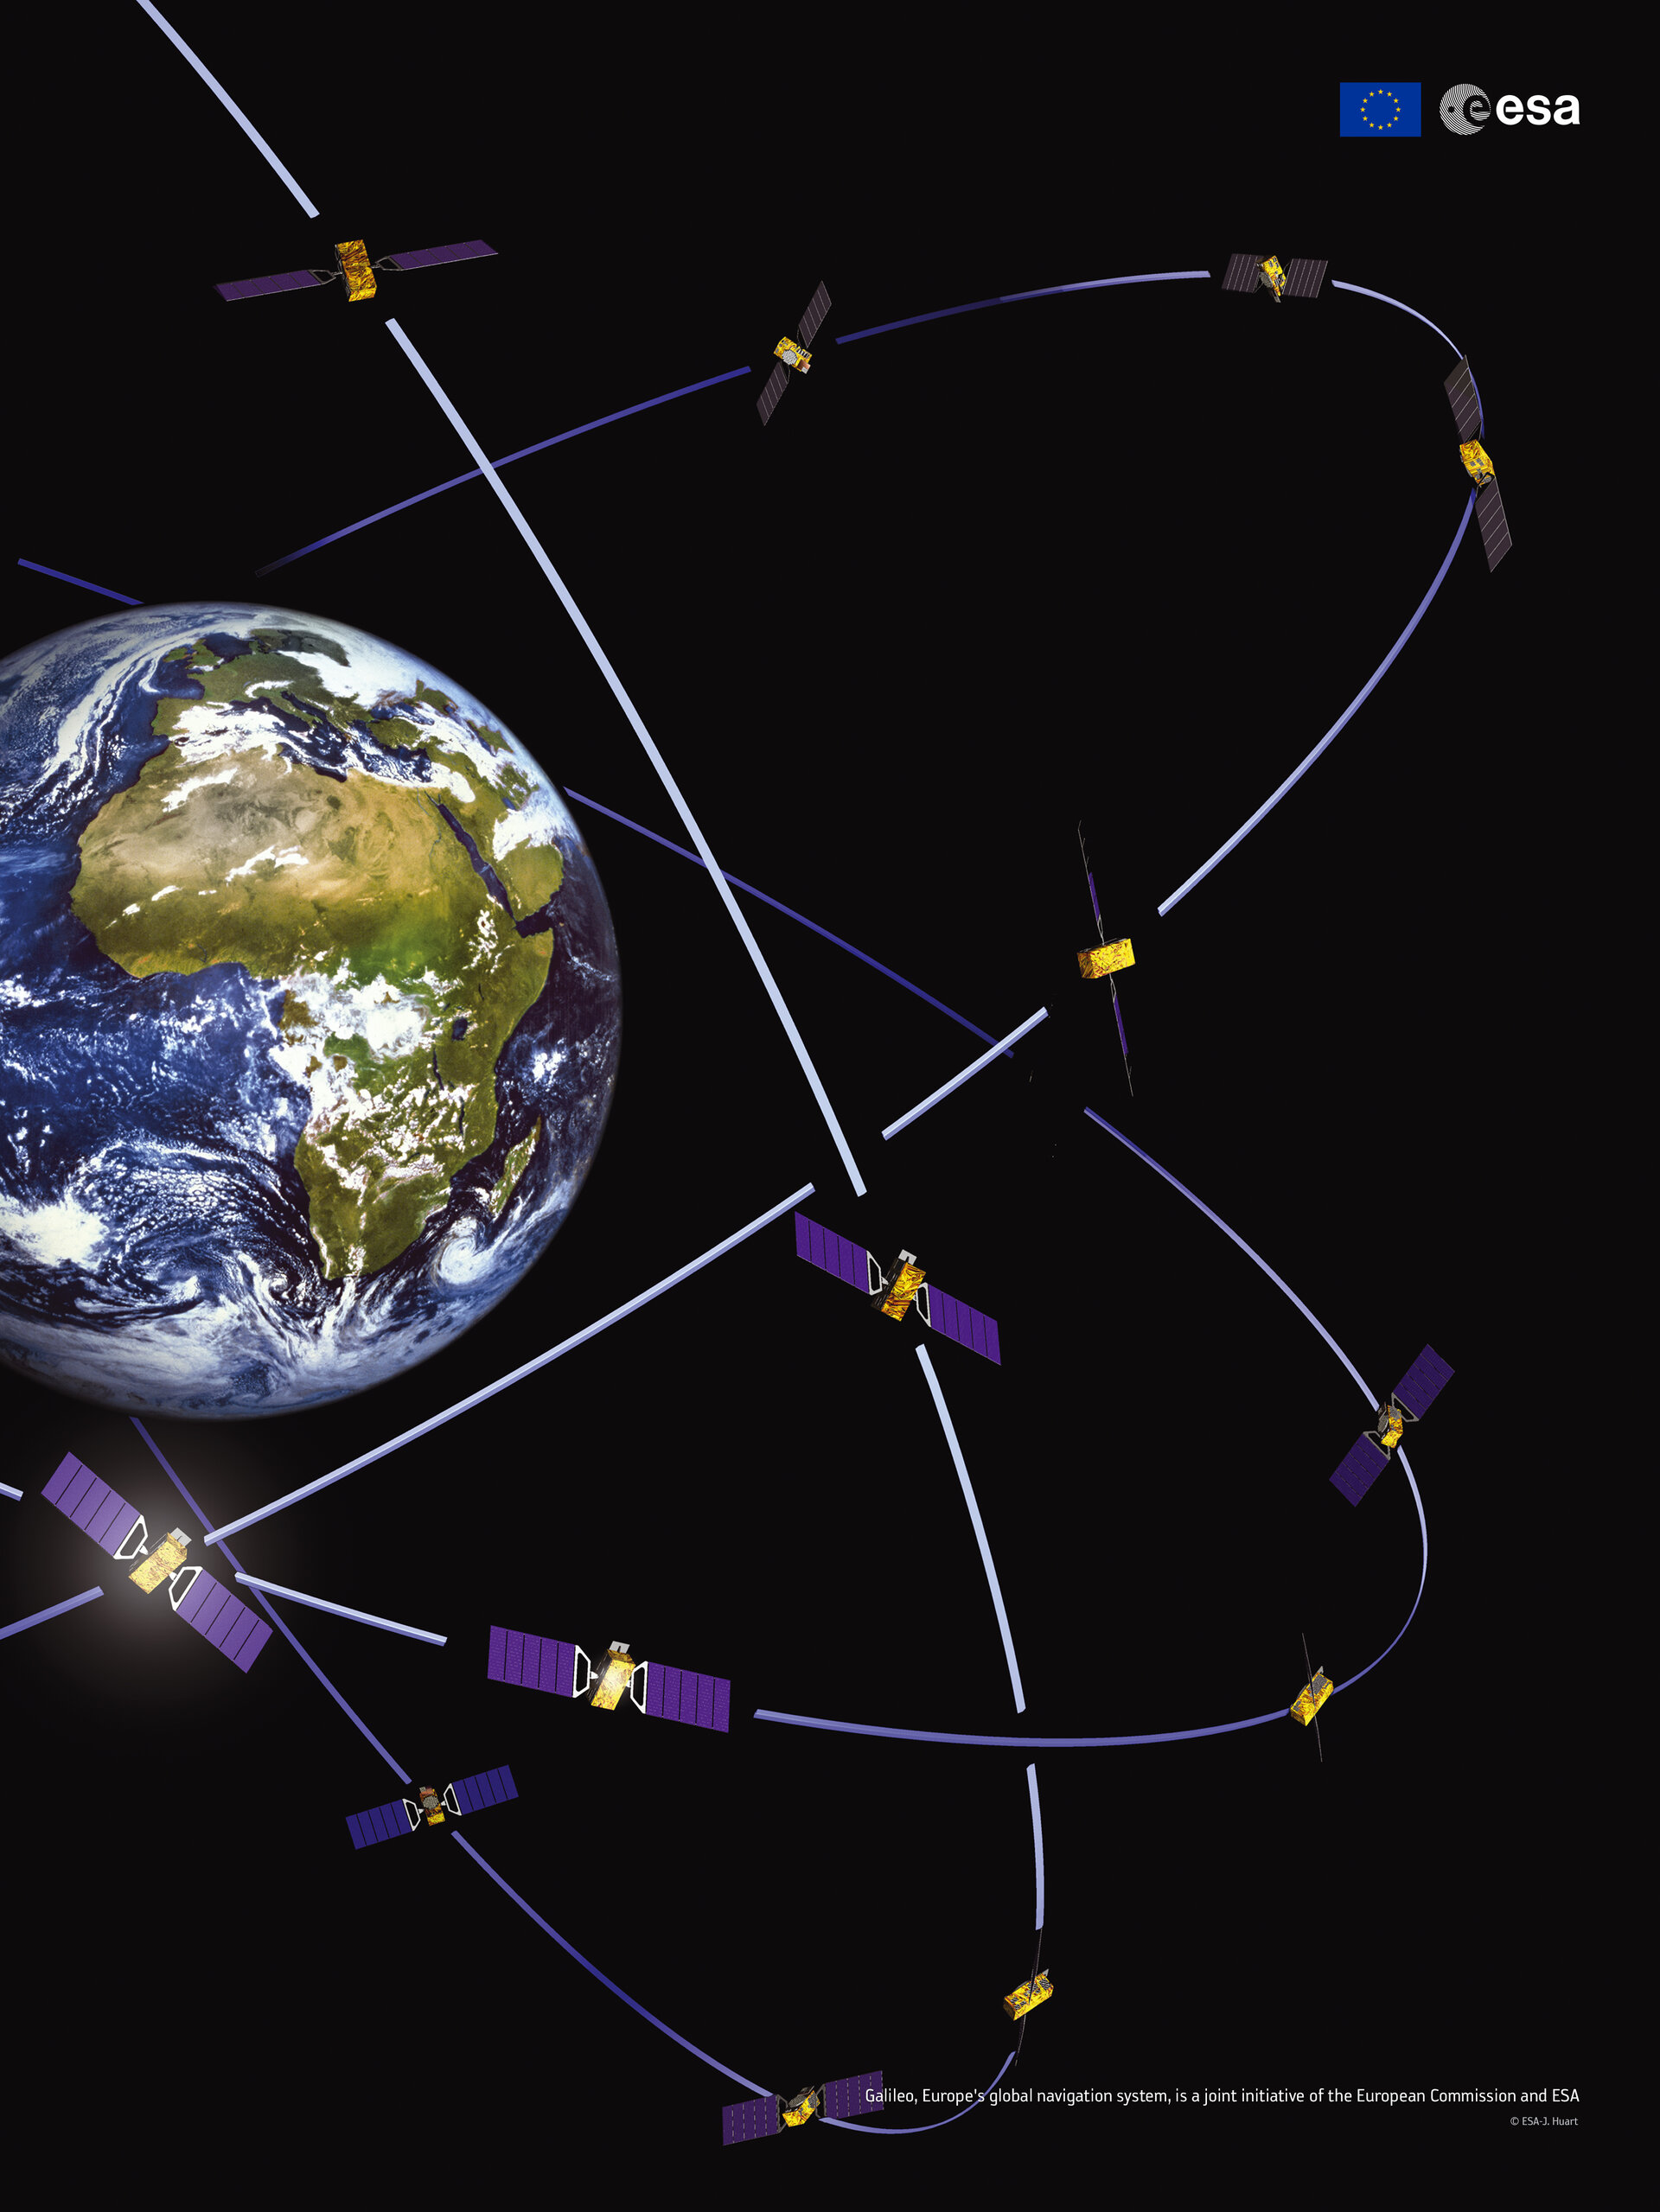 Galileo, Europa's satellietnavigatiesysteem